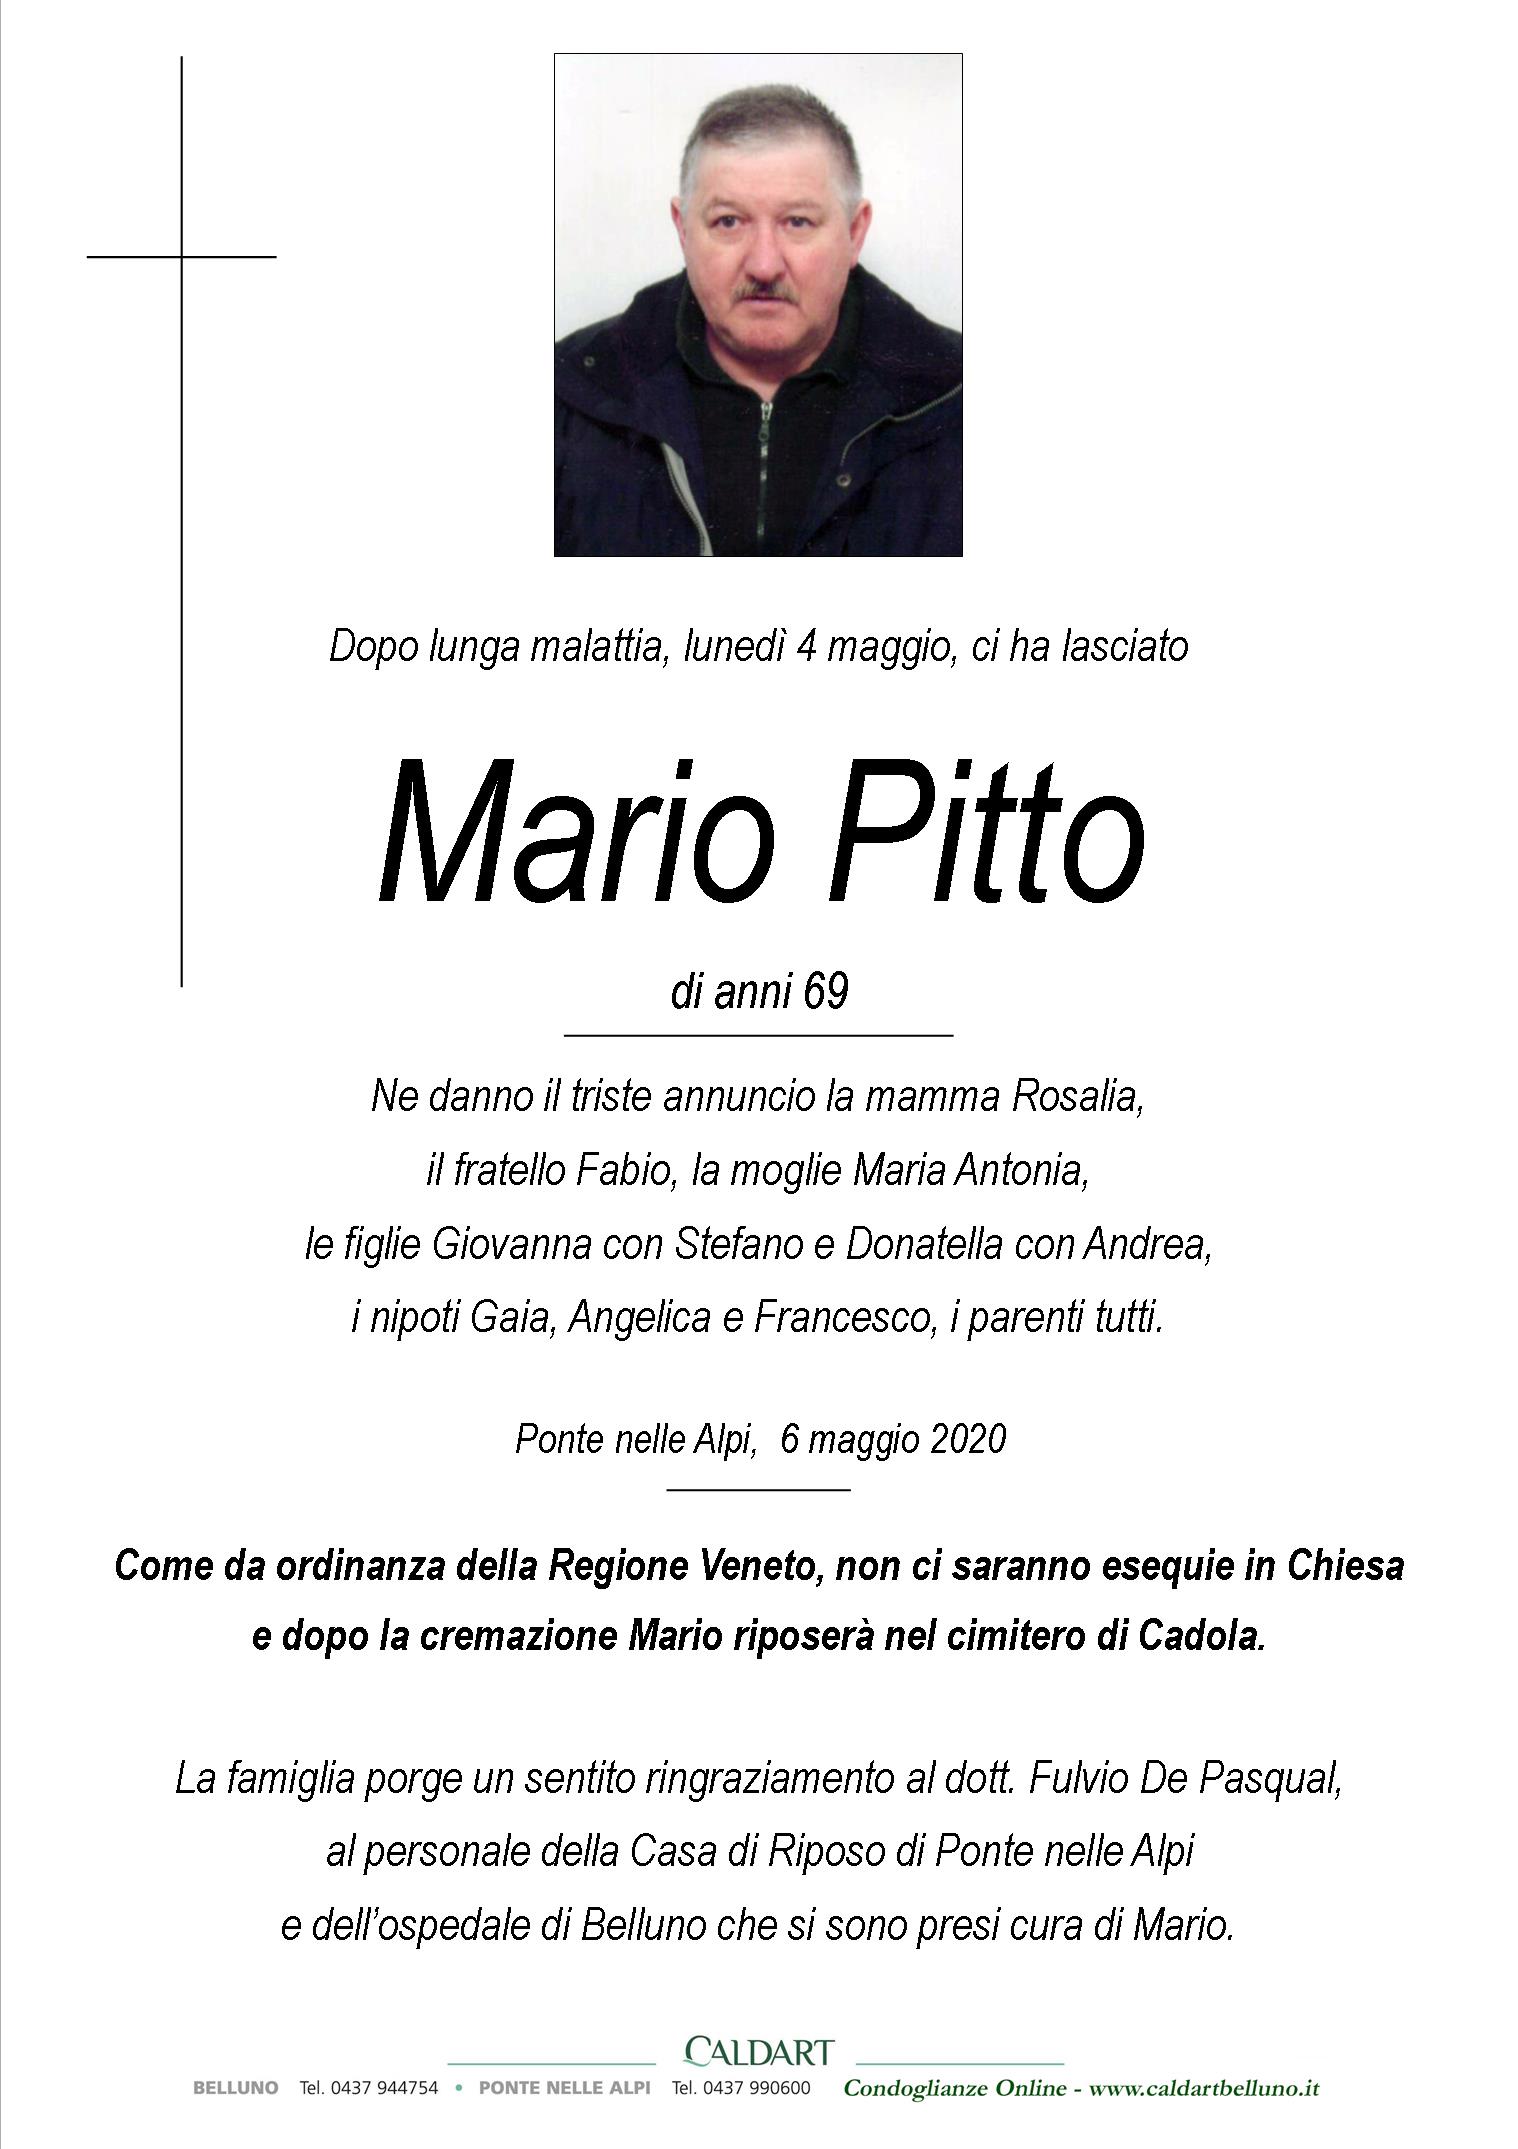 Pitto Mario